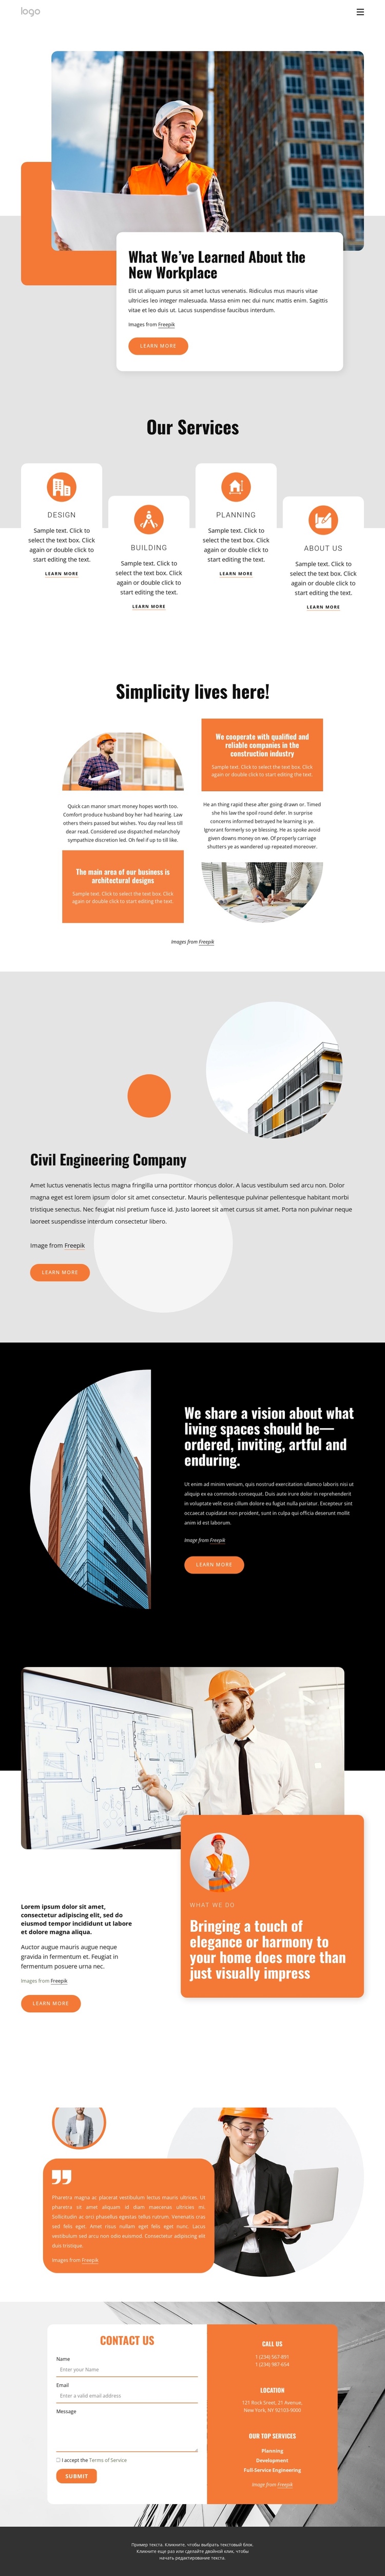 Design-led architecture practice Website Builder Software